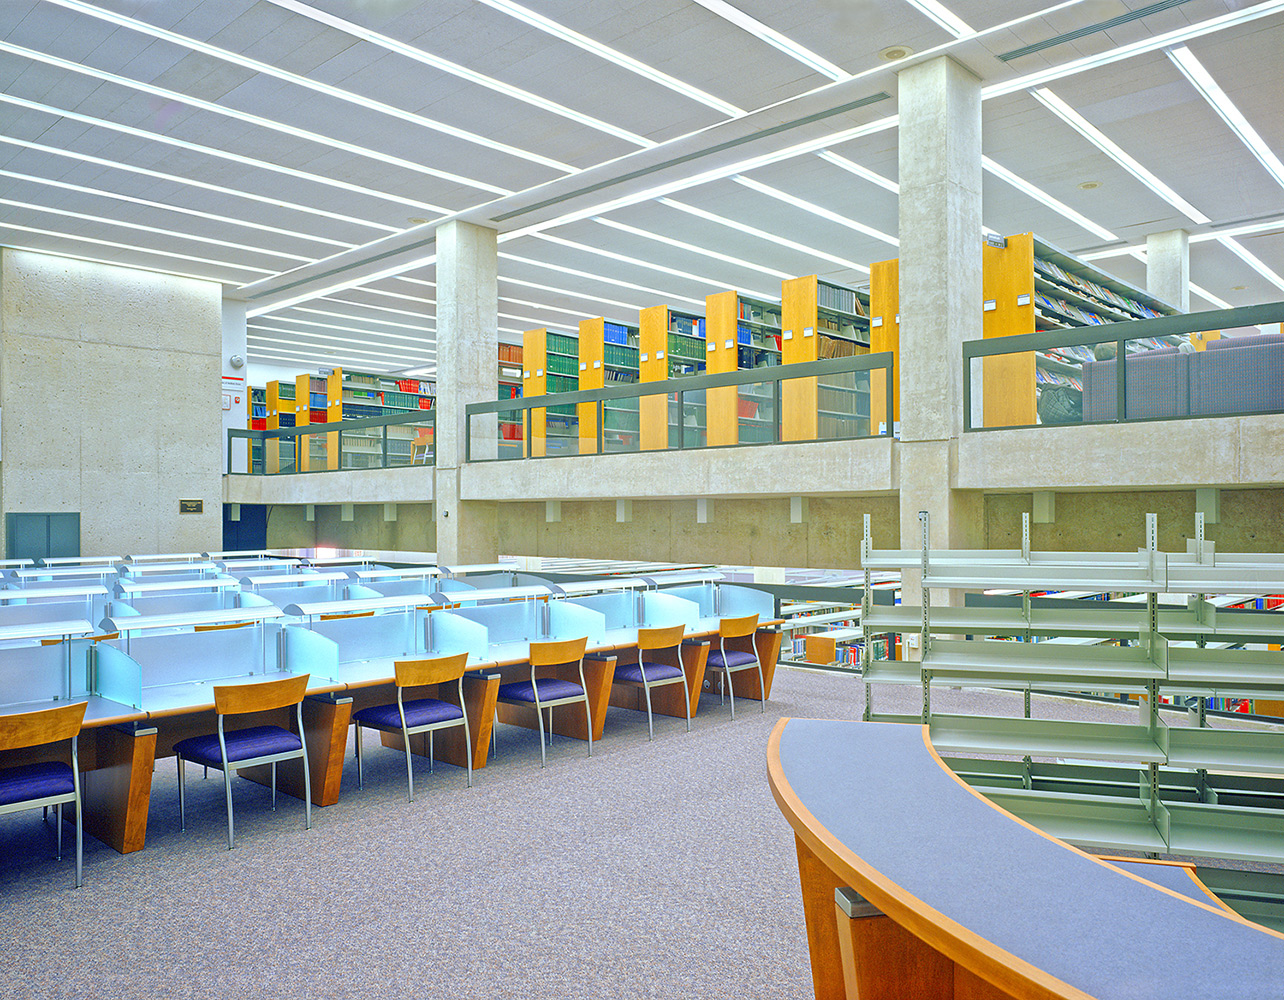 UMDNJ-Newark George F. Smith Library for USA Architects